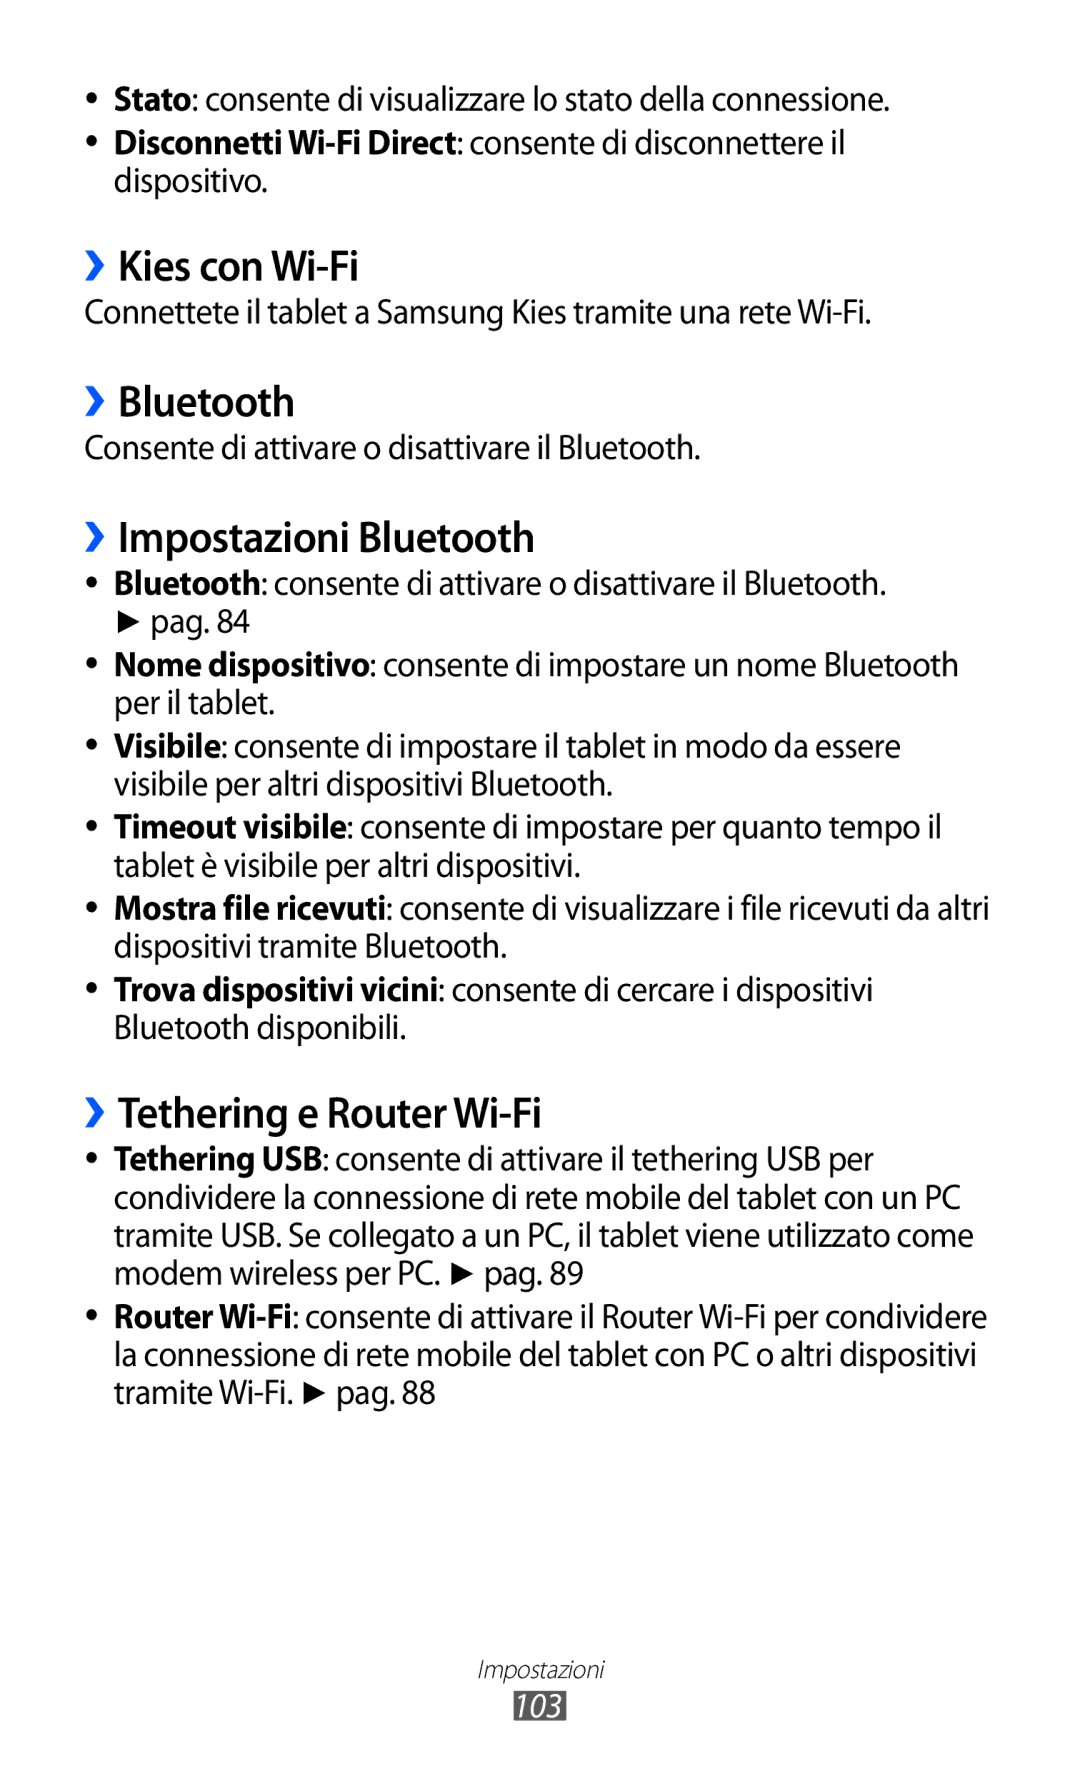 Samsung GT-P7300FKAITV manual ››Kies con Wi-Fi, ››Bluetooth, ››Impostazioni Bluetooth, ››Tethering e Router Wi-Fi, 103 